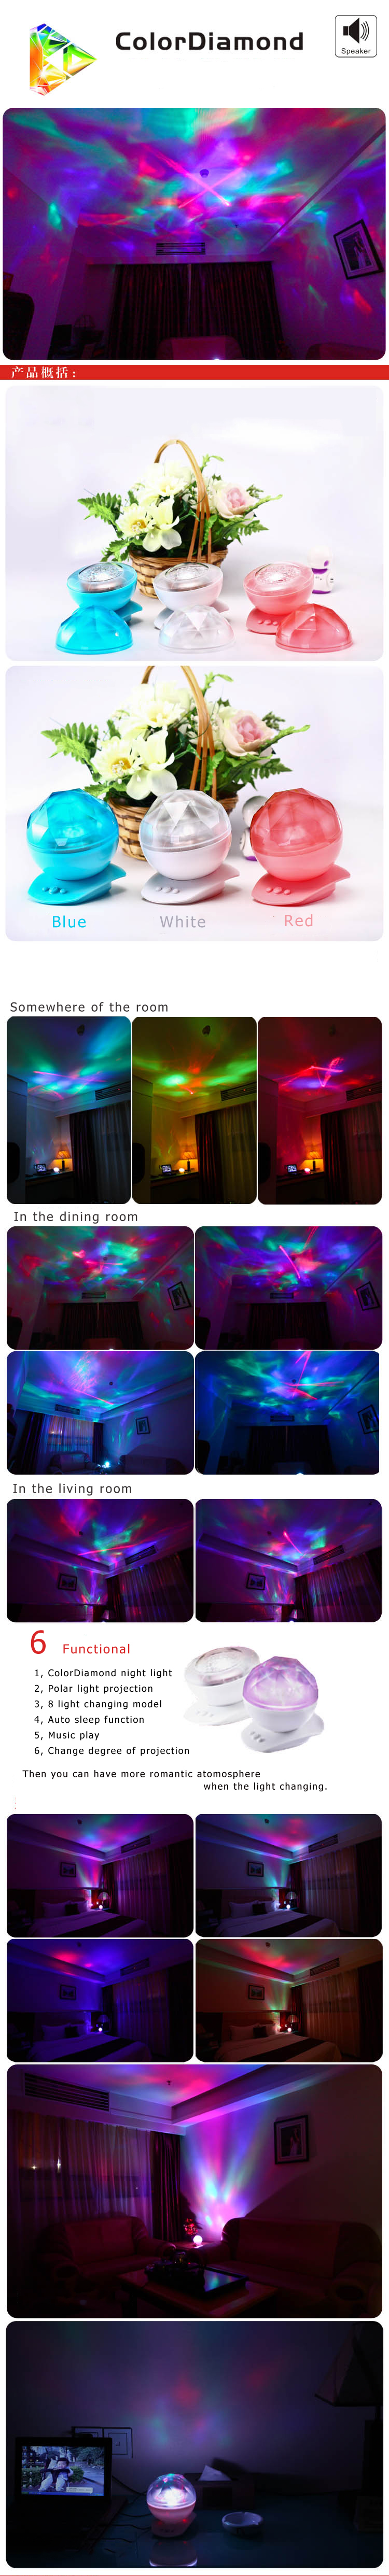 Color-Diamond-Polar-Light-Projector-Multicolored-Light-with-Sound-Romantic-Lamp-Projector-1082906-1